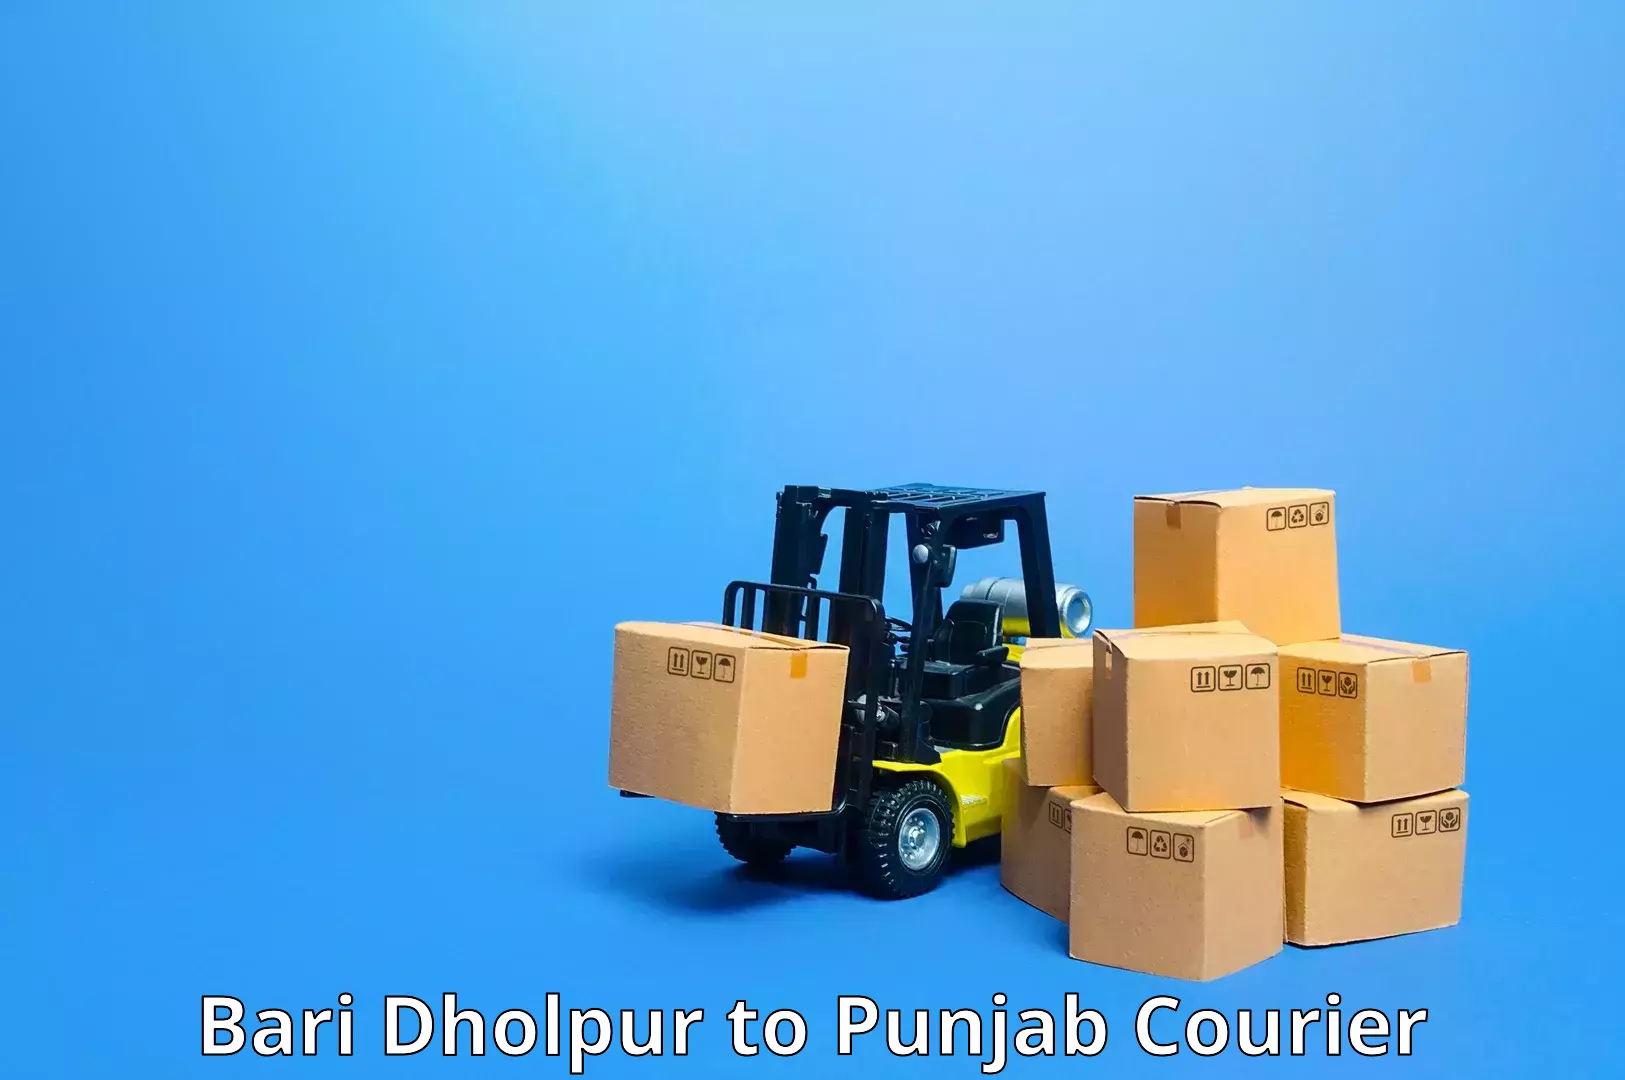 Global shipping networks Bari Dholpur to Punjab